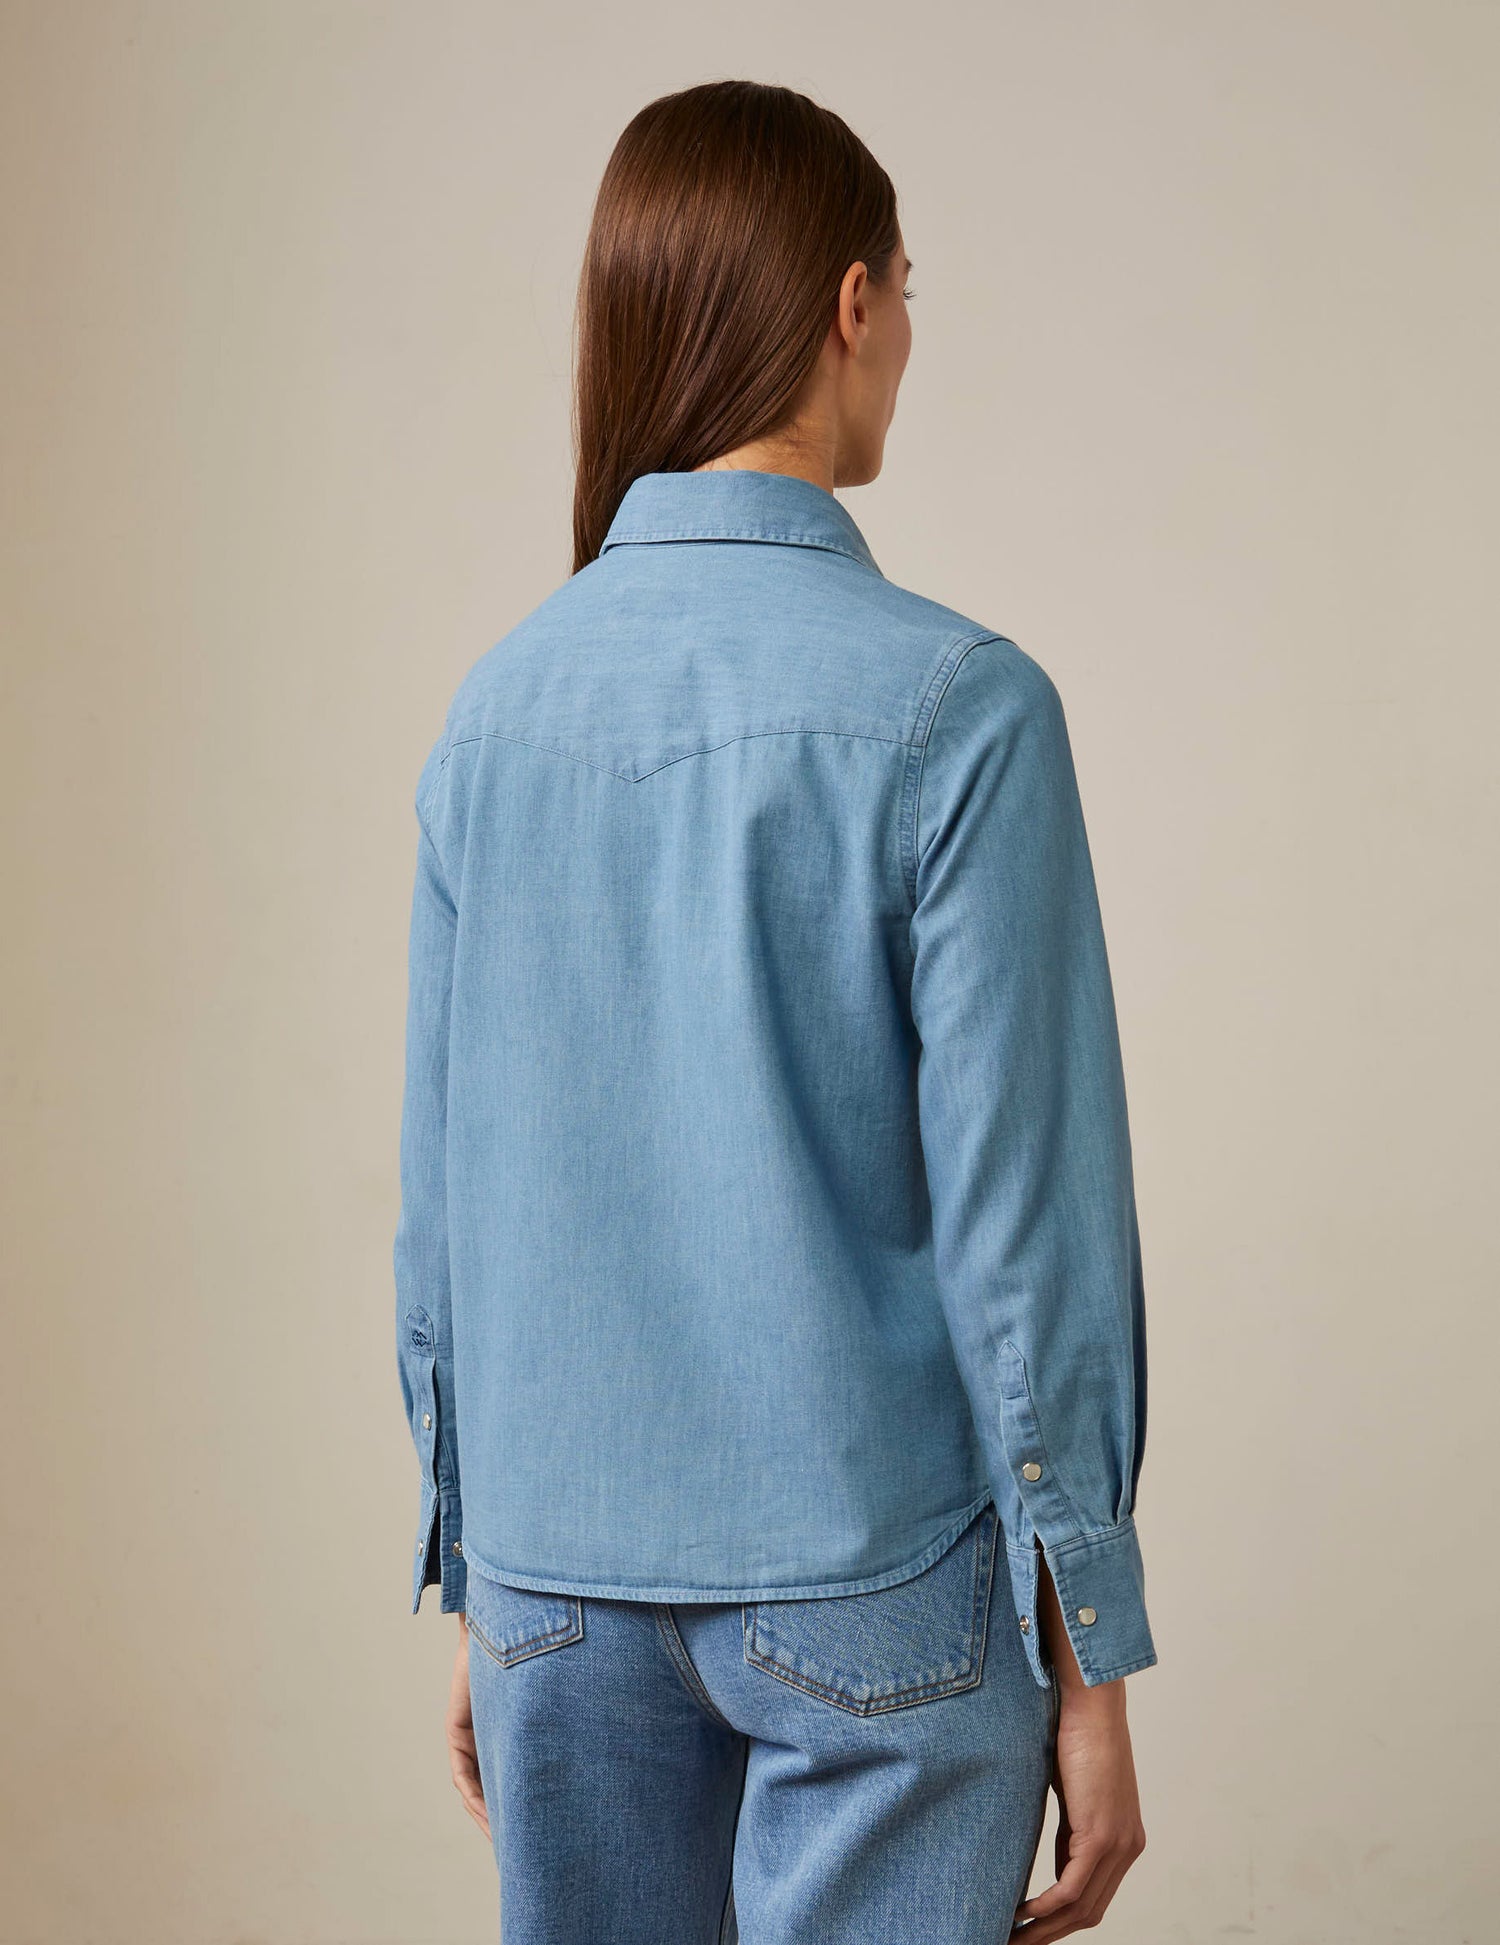 Gisèle shirt in light blue denim - Denim#2